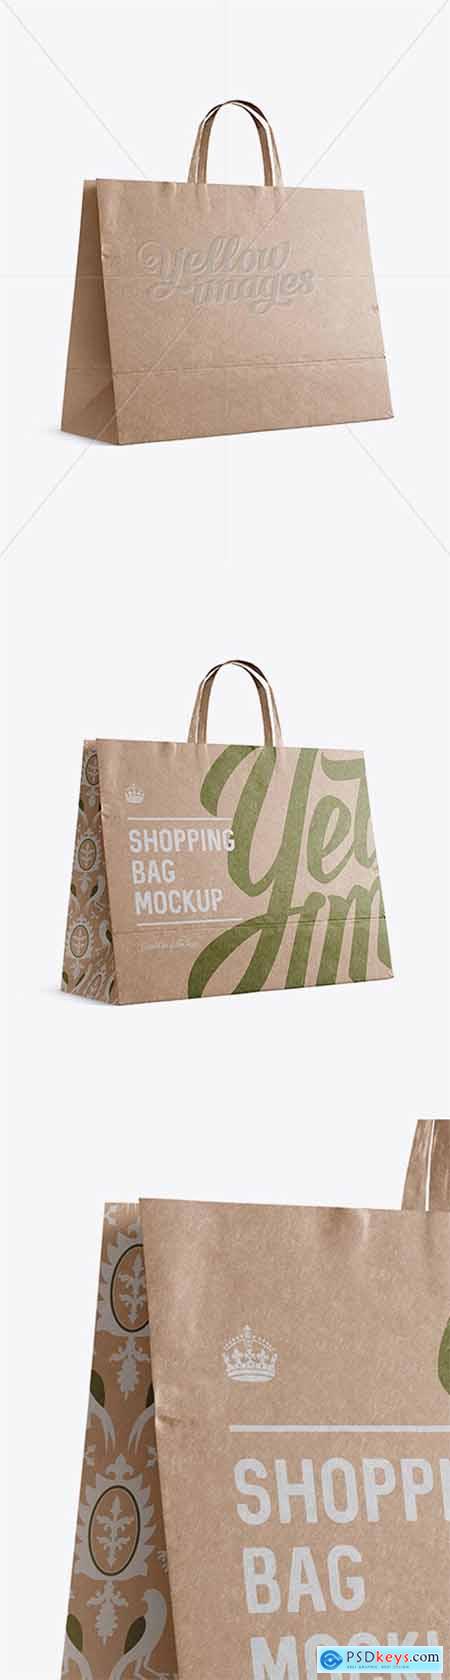 Download Kraft Paper Shopping Bag Mockup - Halfside View (Eye-Level ...